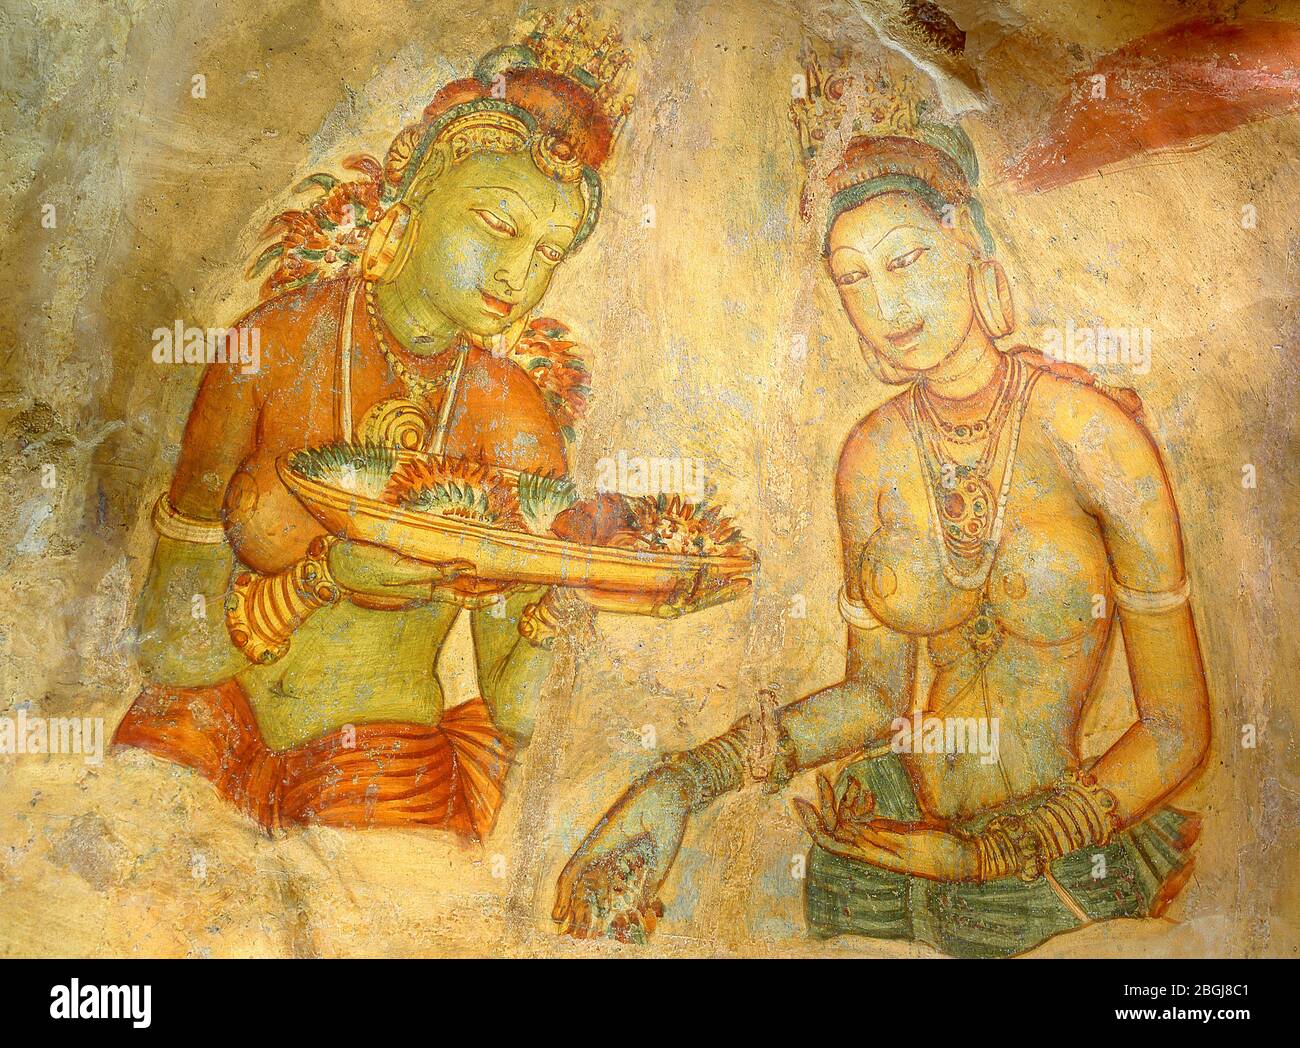 Sigiriya Maidens fresco painting, Sigiriya (Sinhagiri), Matale District, Province du Sud, Sri Lanka Banque D'Images